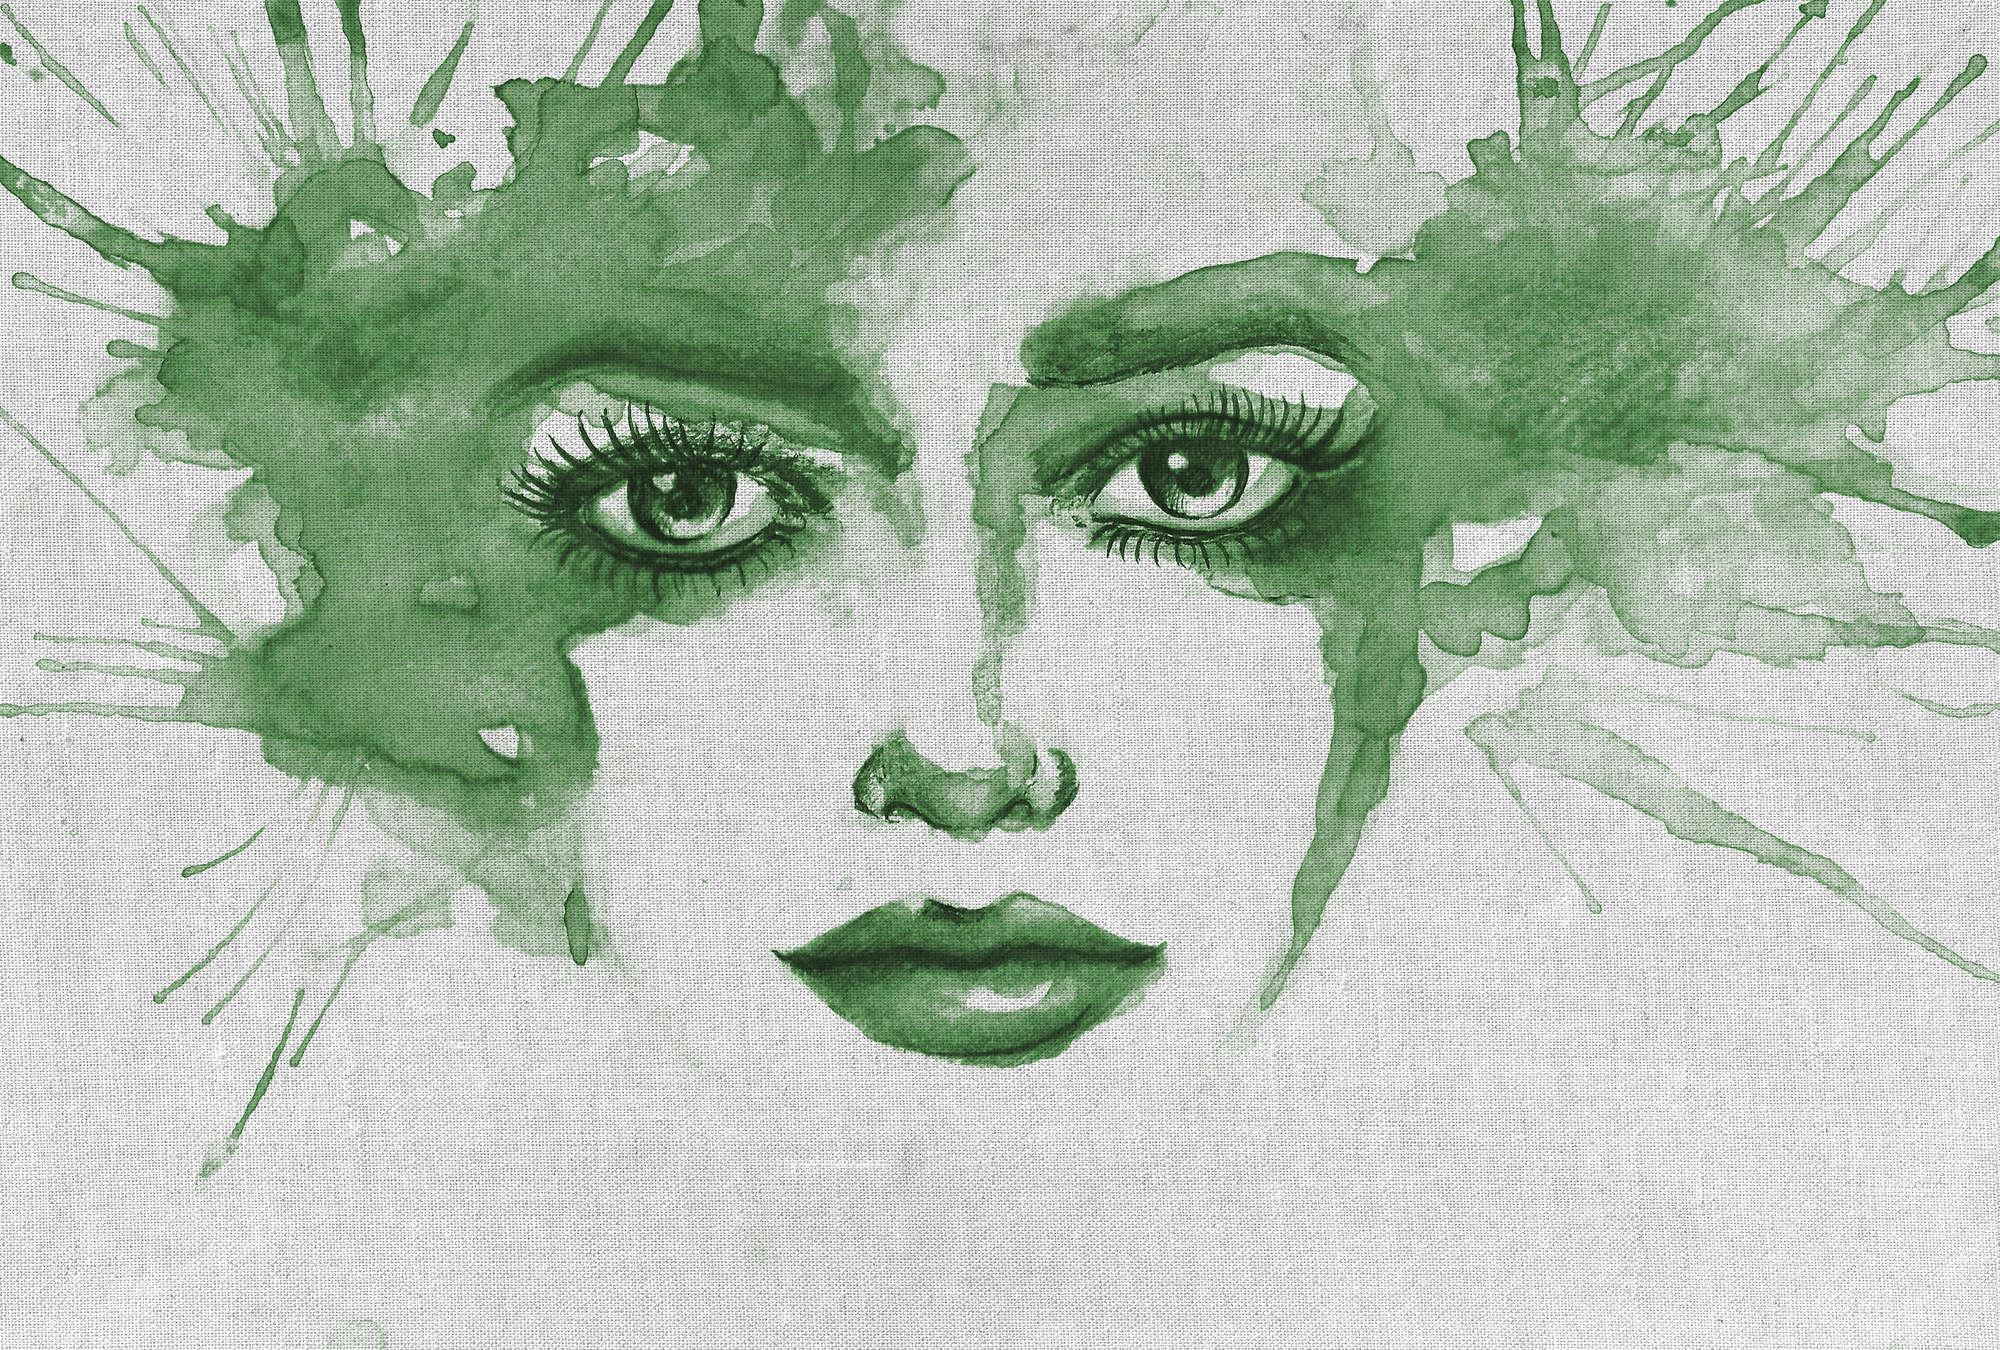             Art mural watercolour & woman face - green
        